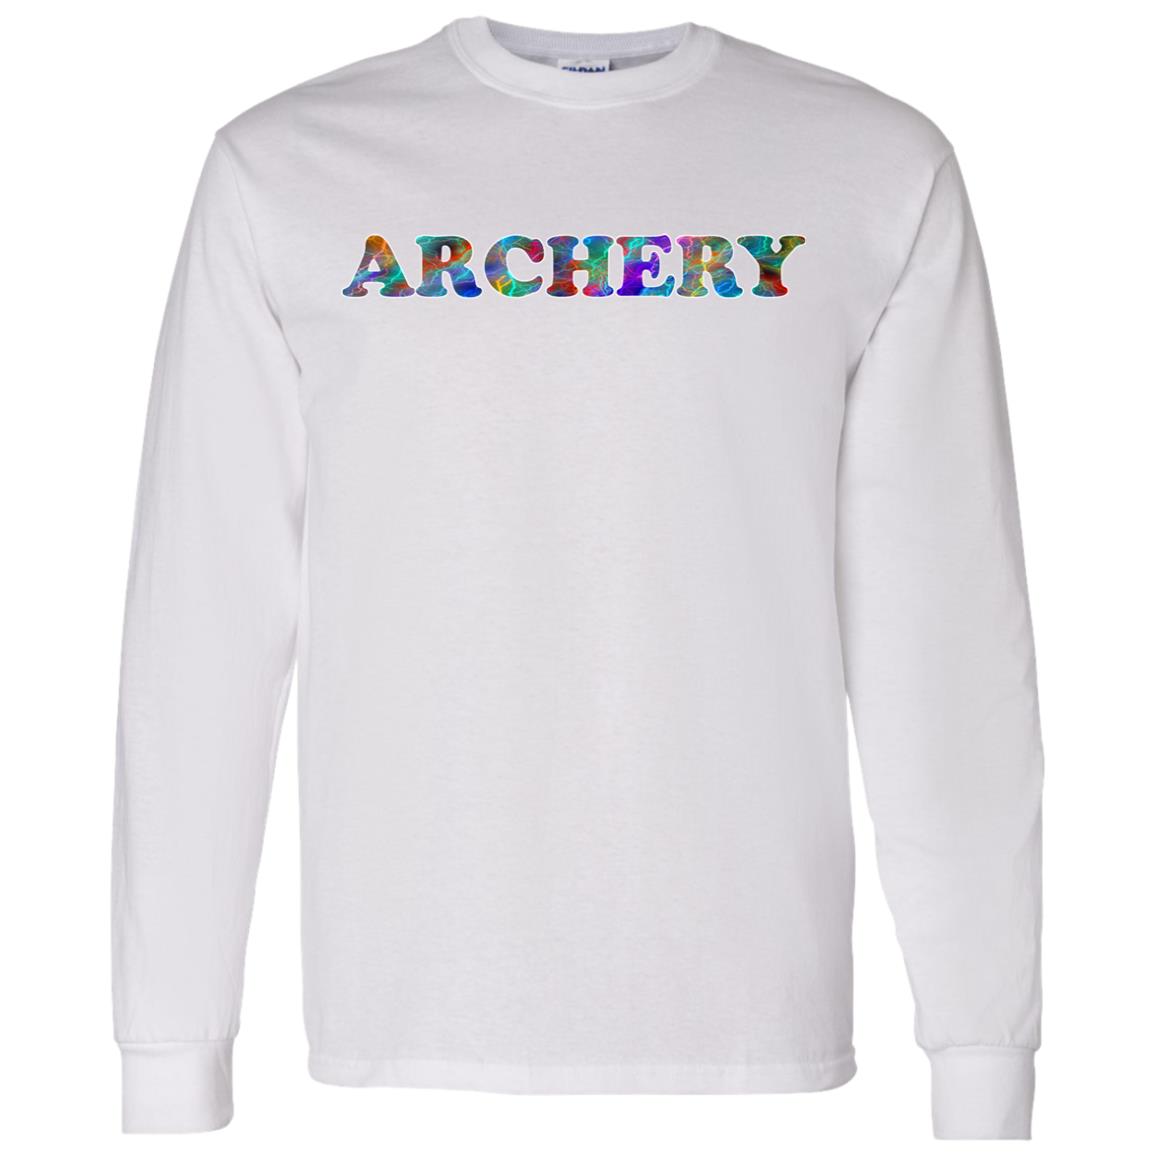 Archery Long Sleeve T-Shirt